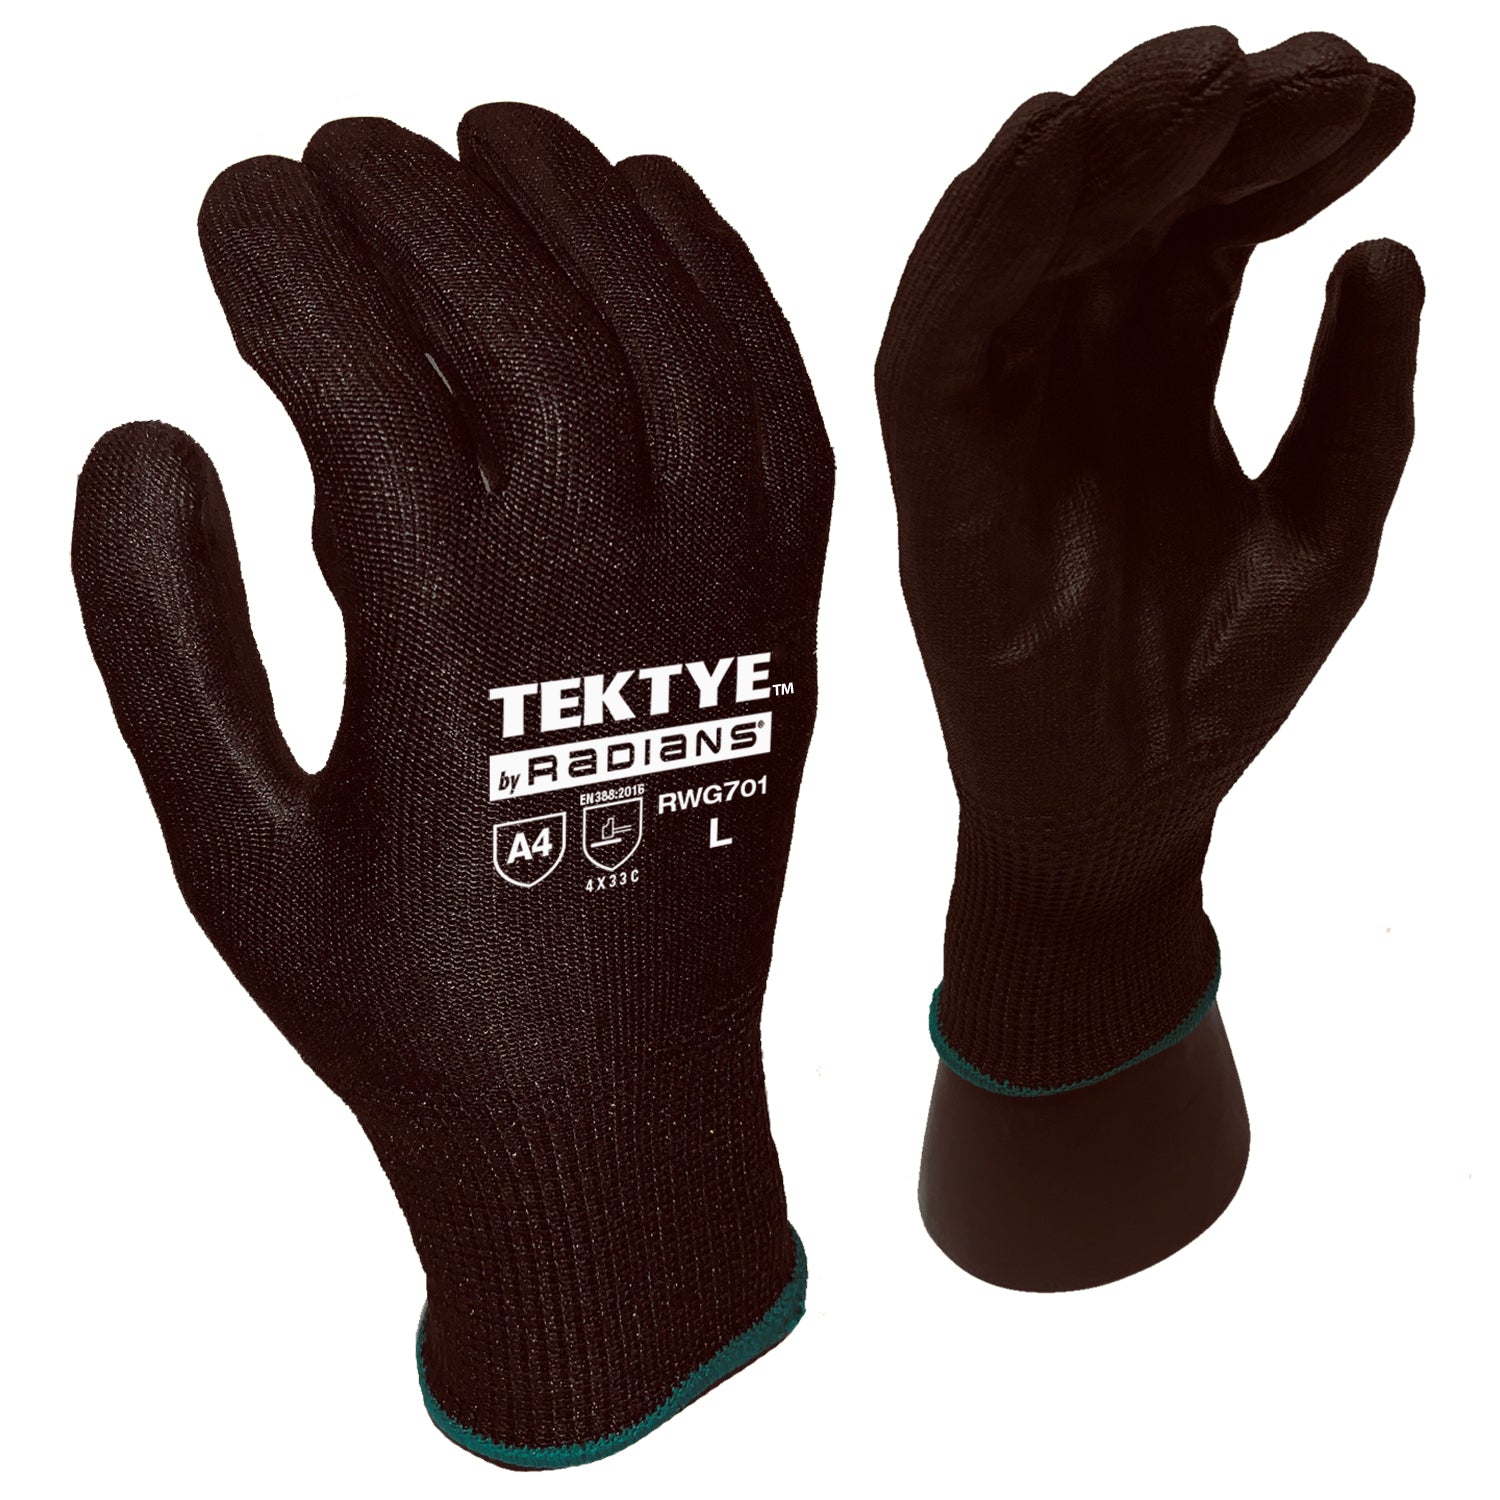 Radians RWG701 TEKTYE Touchscreen A4 Work Glove